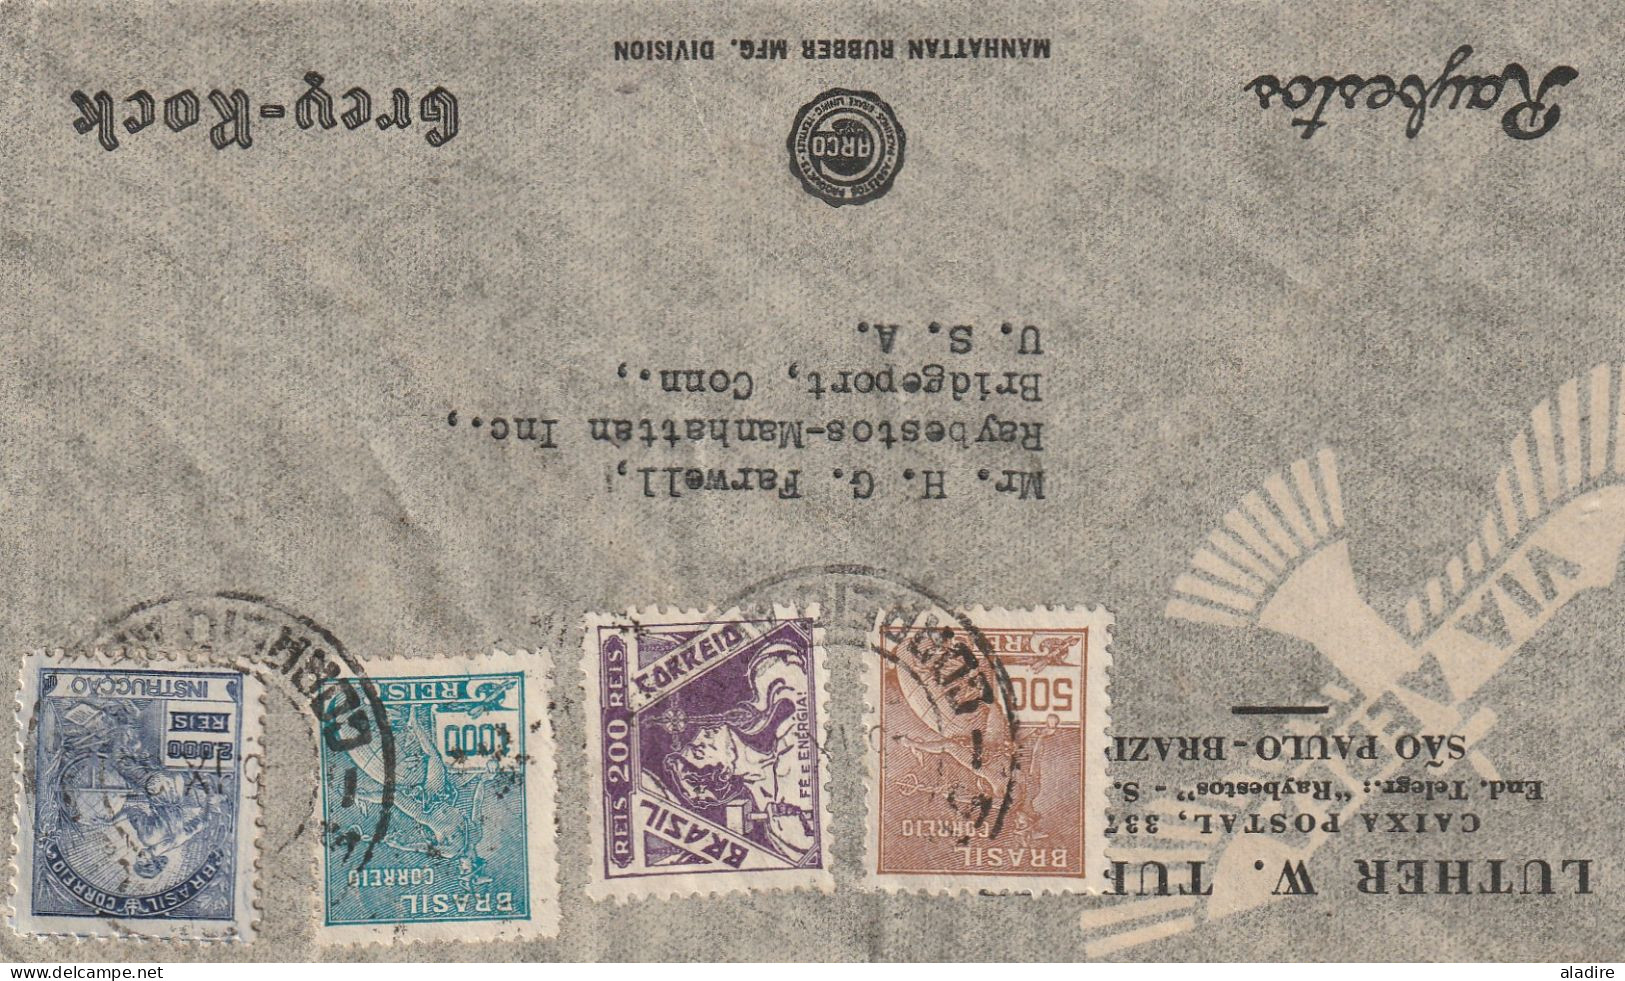 1928/1950 - POSTE AERIENNE - Collection de 19 enveloppes PAR AVION Via Aerea condor aeropostale pan air air france varig